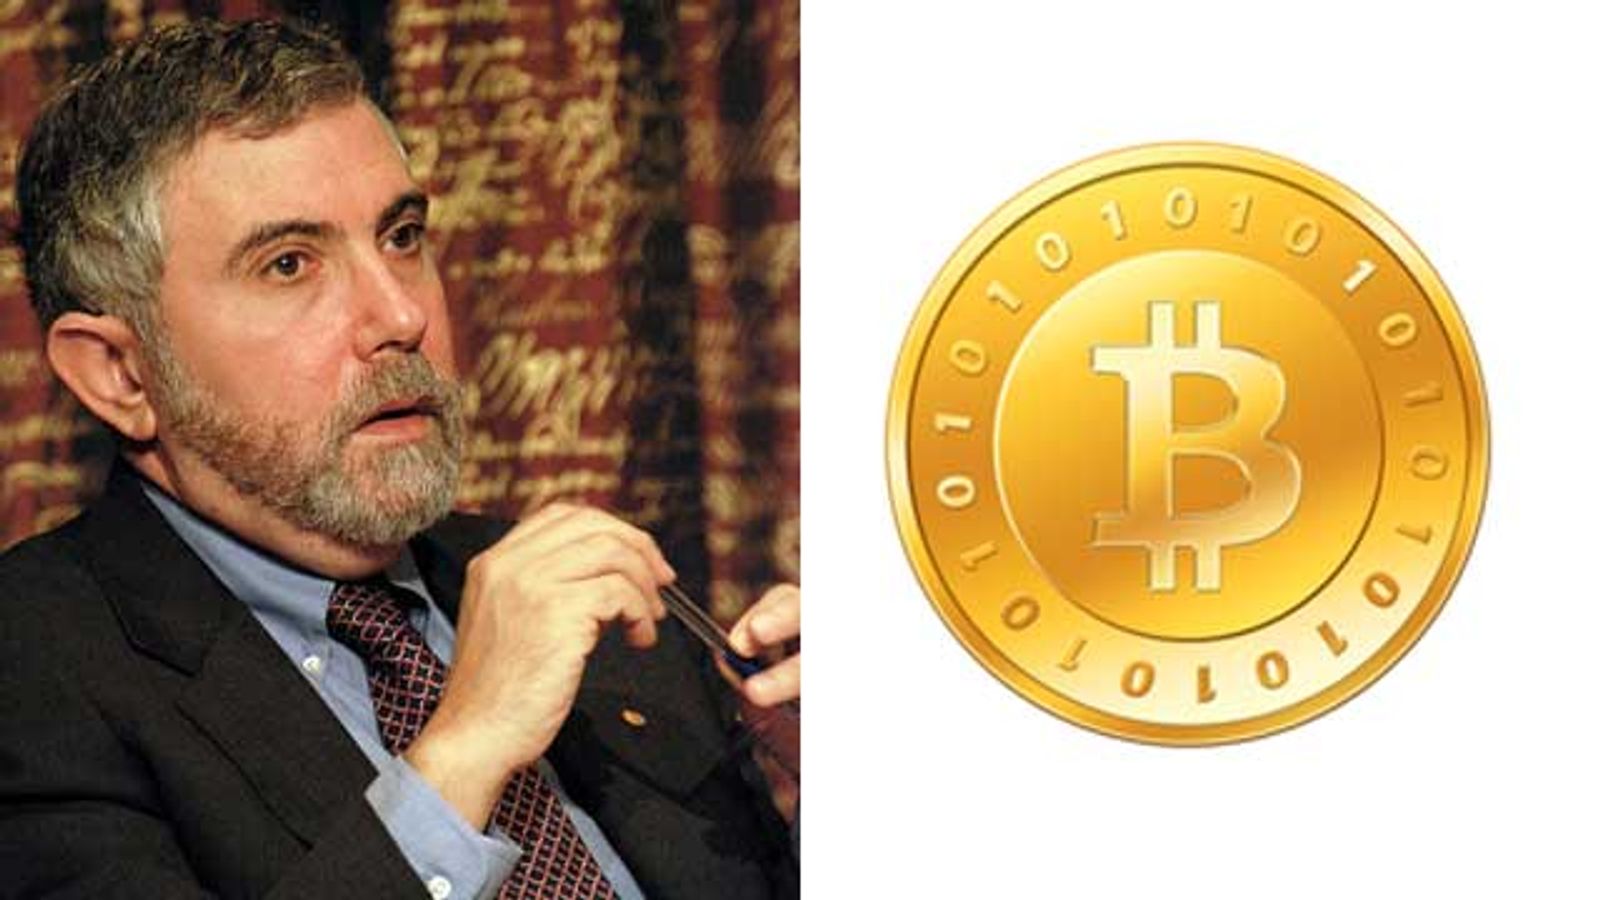 Paul Krugman Accuses Bitcoin 'Bitbugs' of Antisocial Tendencies